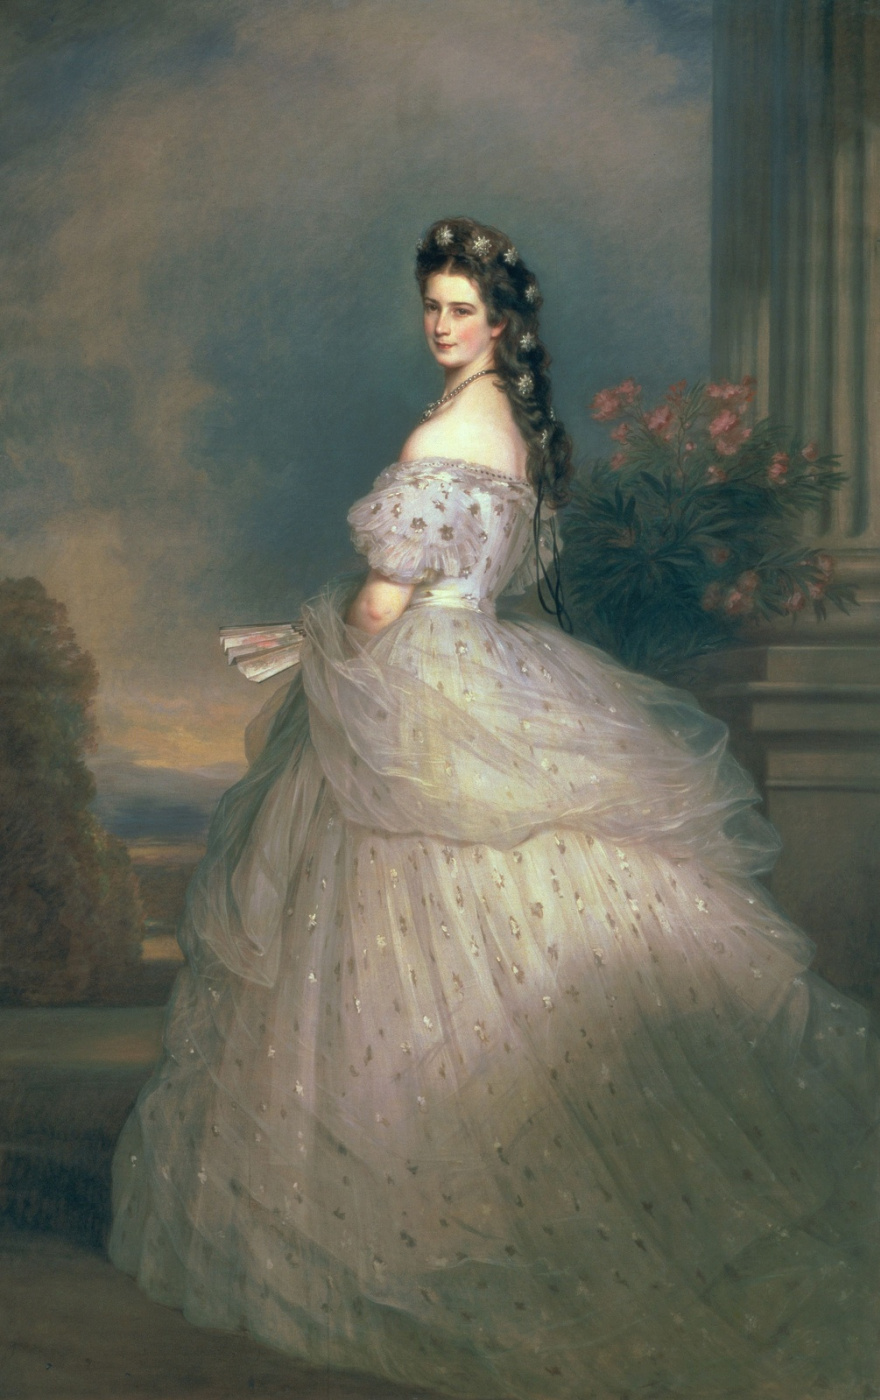 Franz Xaver Winterhalter. Elizabeth of Bavaria, Empress of Austria, wife of Emperor Franz Joseph, in a formal dress with diamond stars